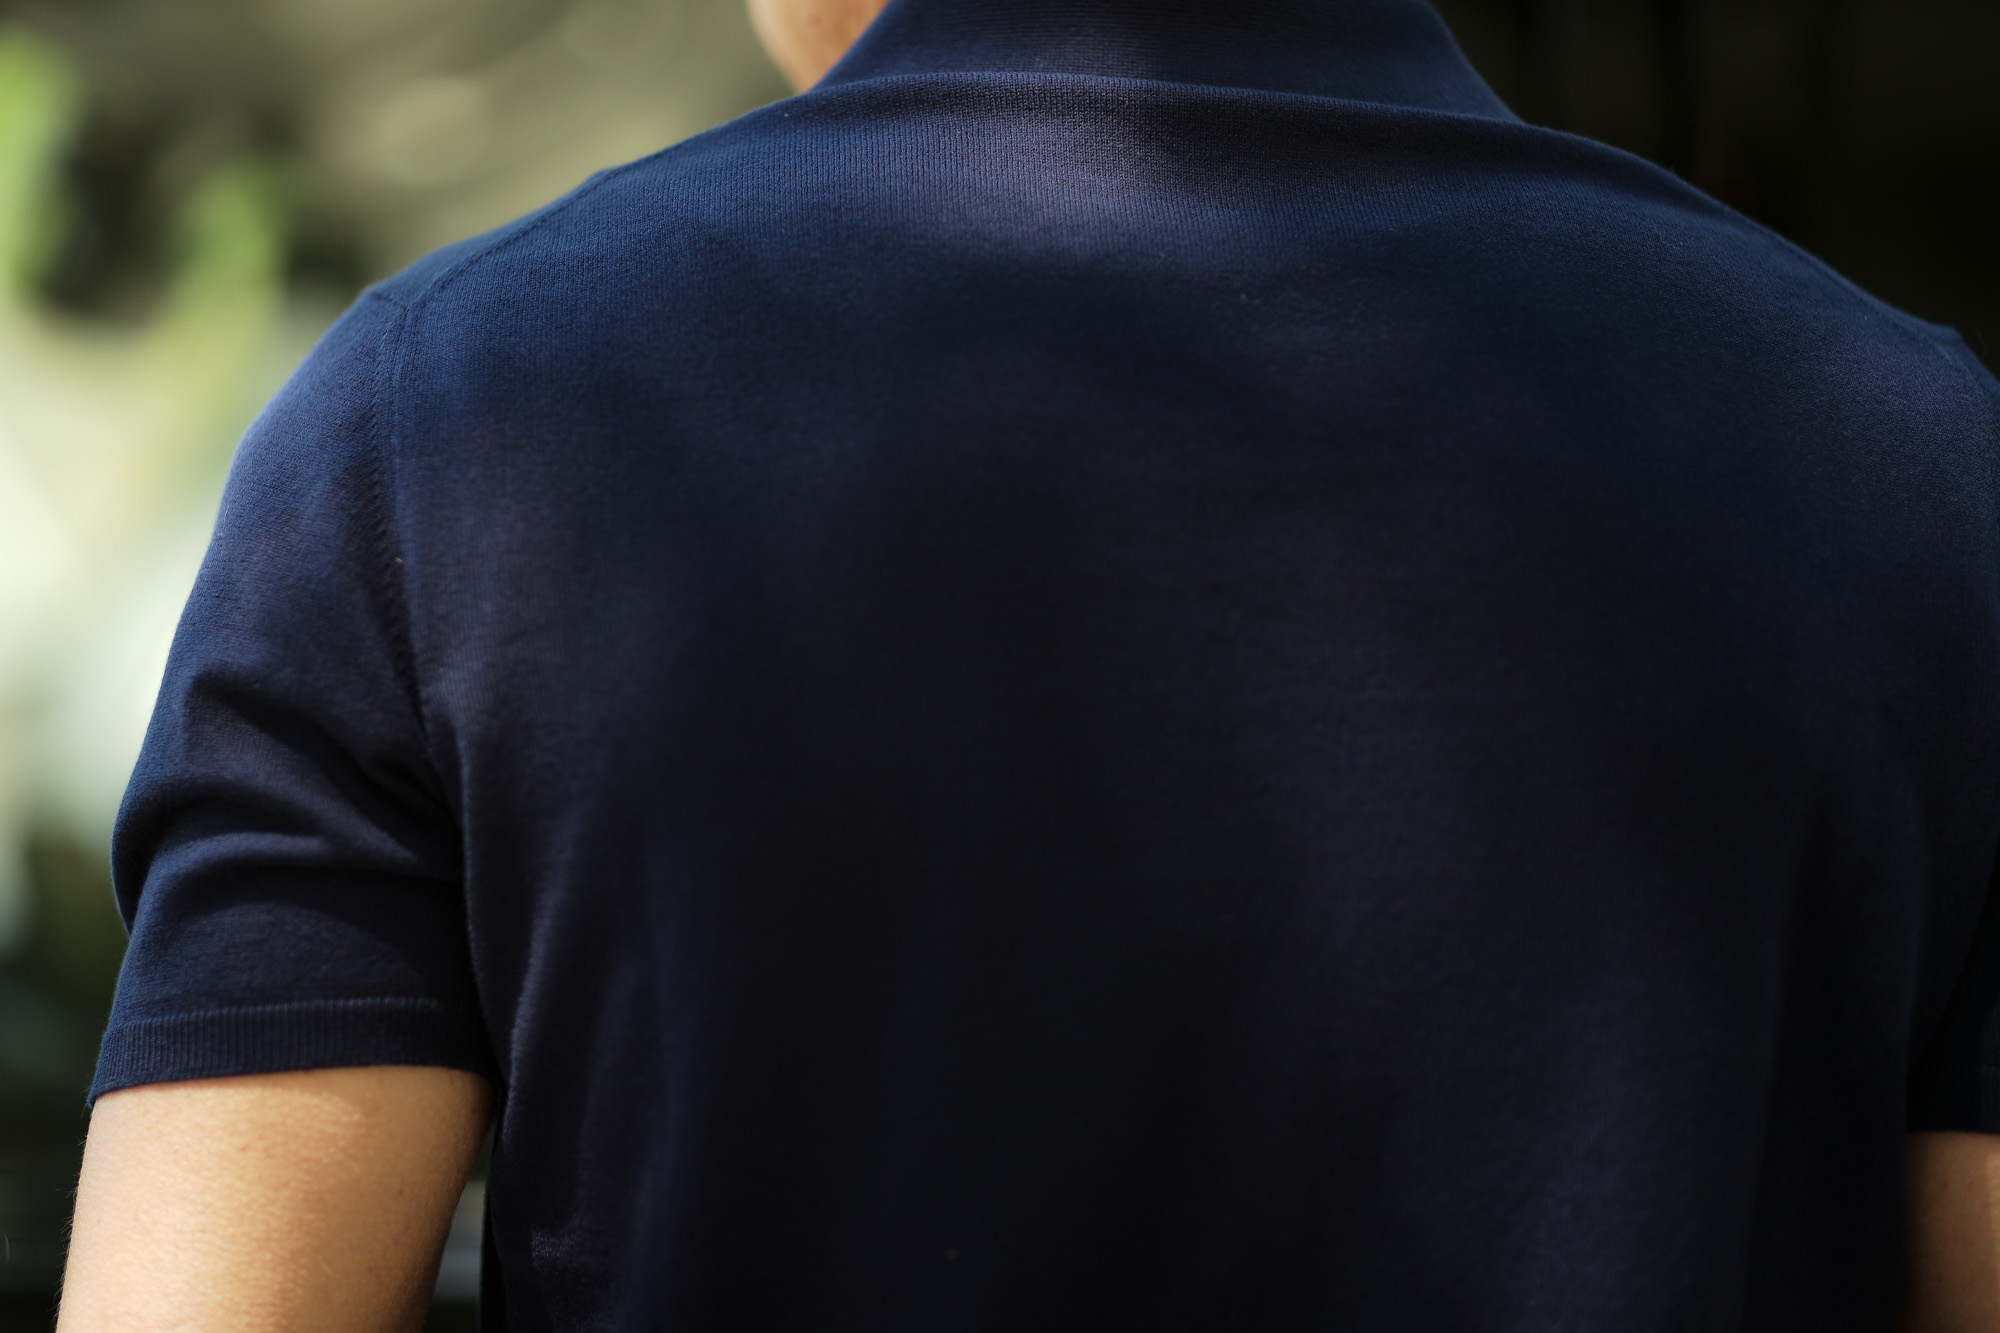 Cruciani (クルチアーニ) Knit Polo Shirt (ニット ポロシャツ) 27ゲージ コットン ニット ポロシャツ NAVY (ネイビー・Z0063) made in italy (イタリア製) 2019 春夏新作 愛知 名古屋 altoediritto アルトエデリット